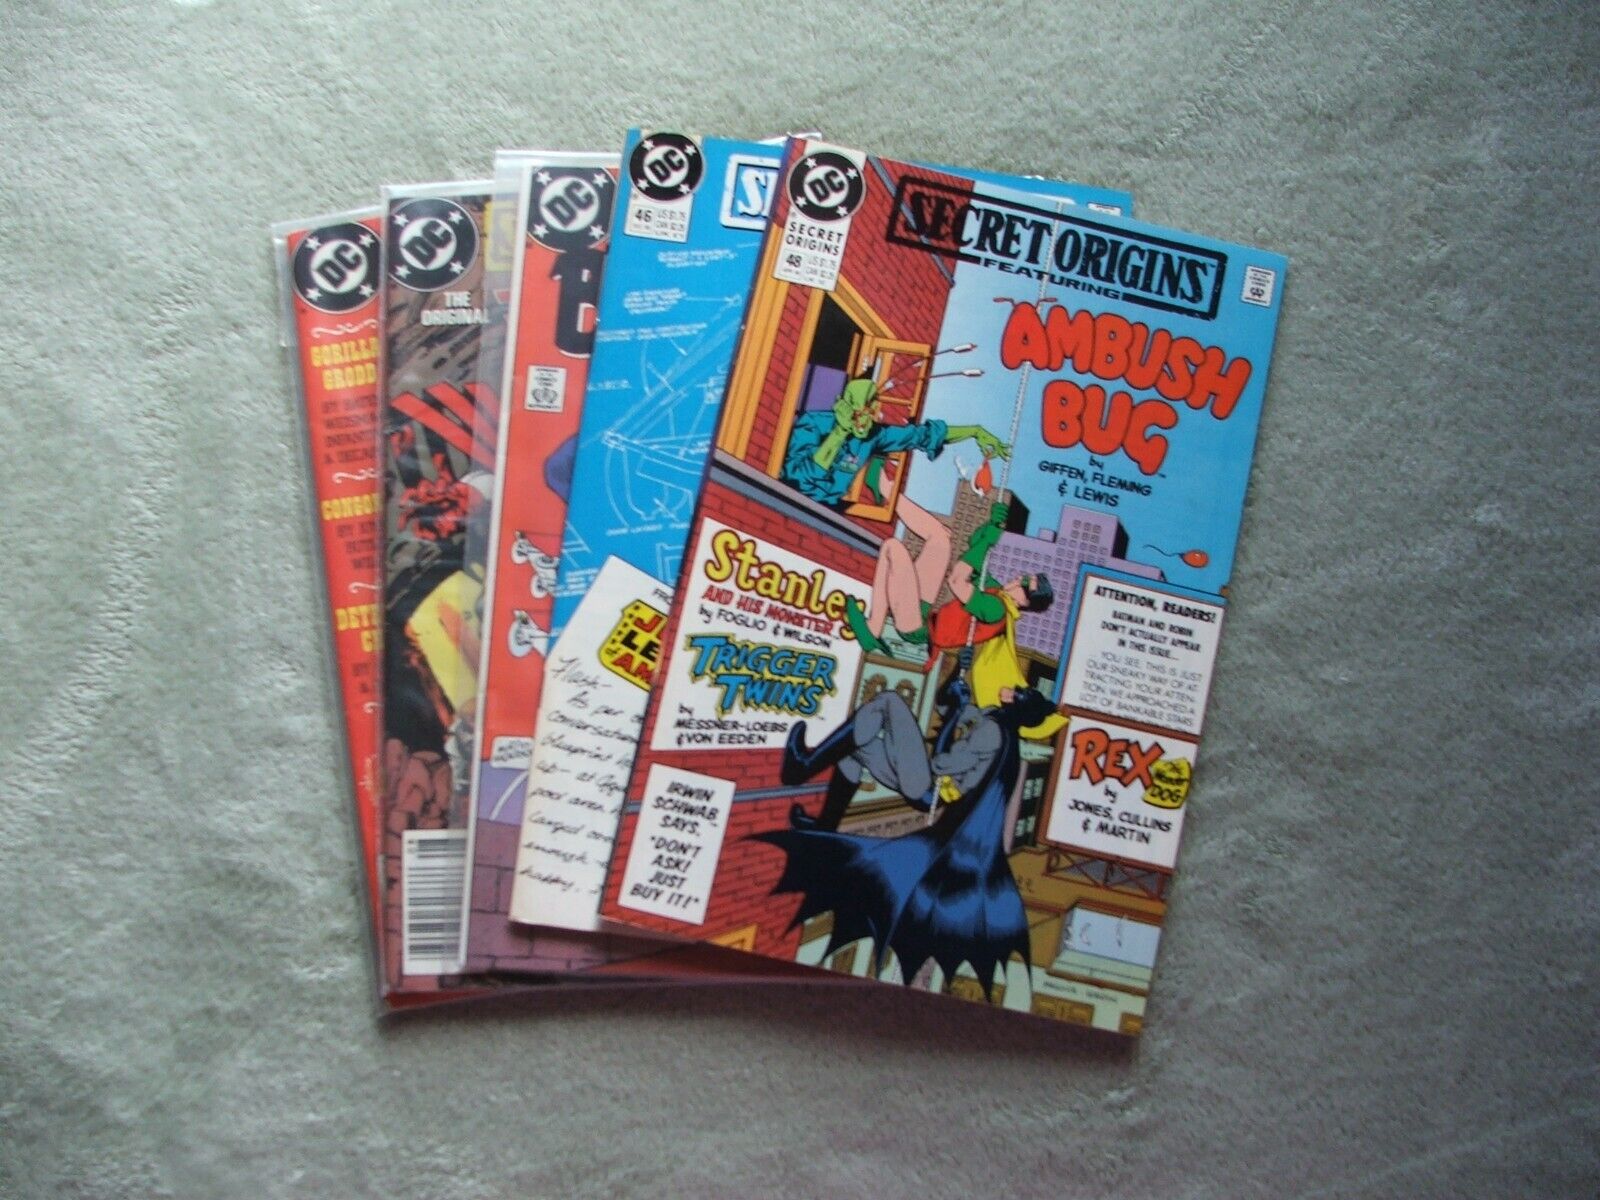 DC Comics Secret Origins lot of 5 books. Hawk & Dove, Ambush Bug, Blackhawk, etc